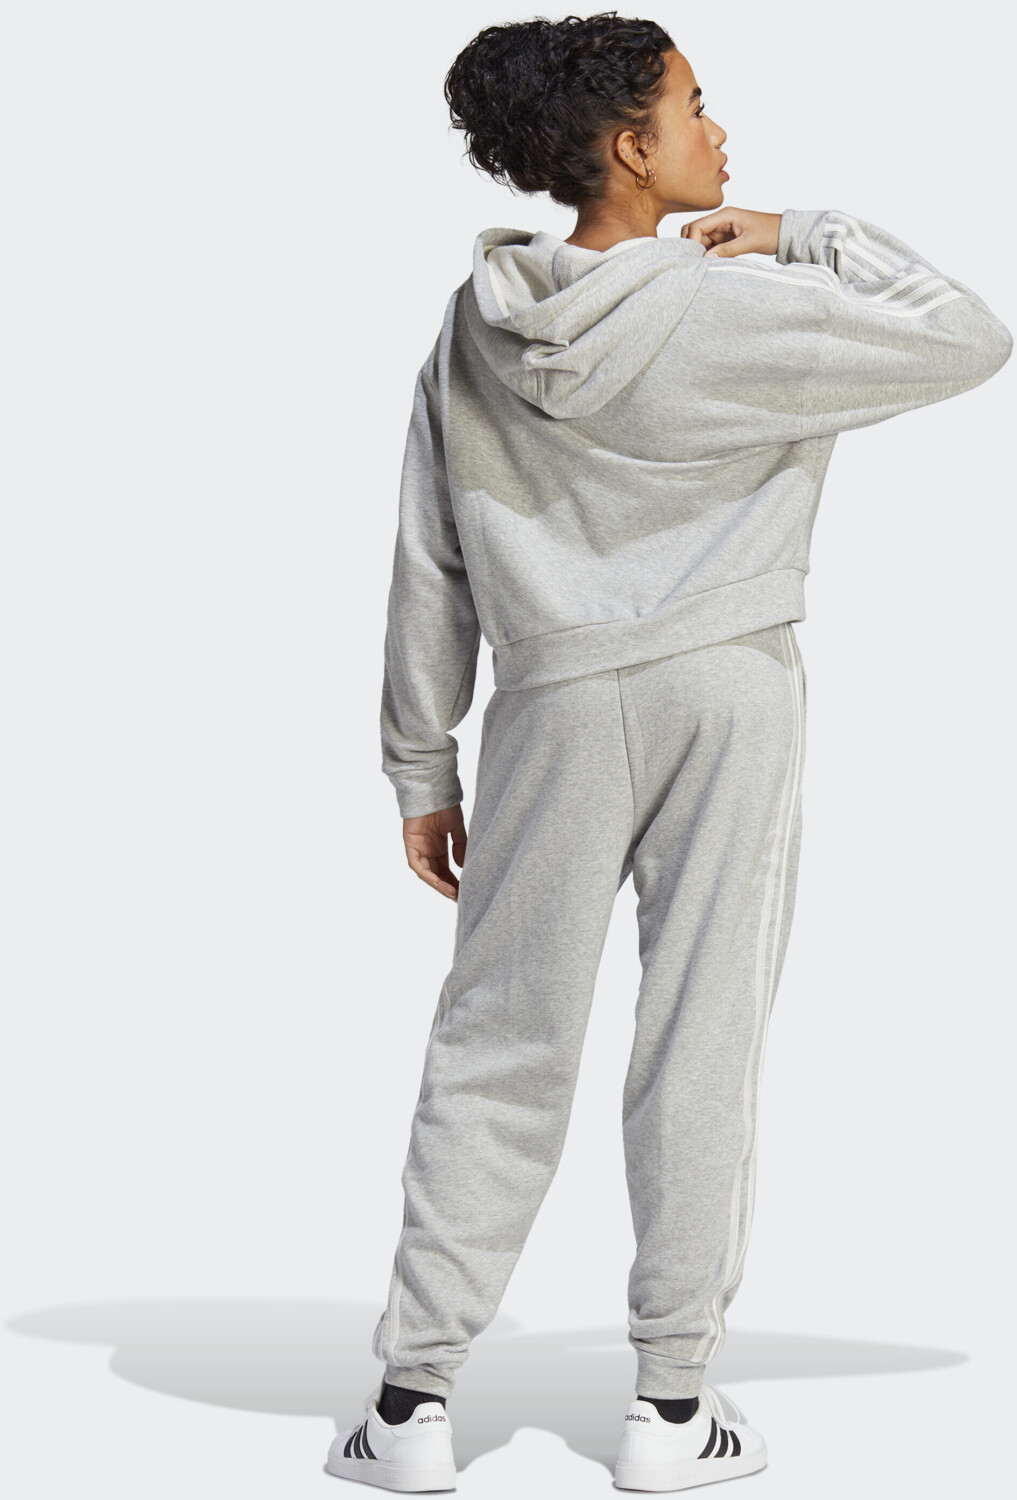 Adidas Energize Trainingsanzug medium € bei Preisvergleich 59,95 ab grey | heather